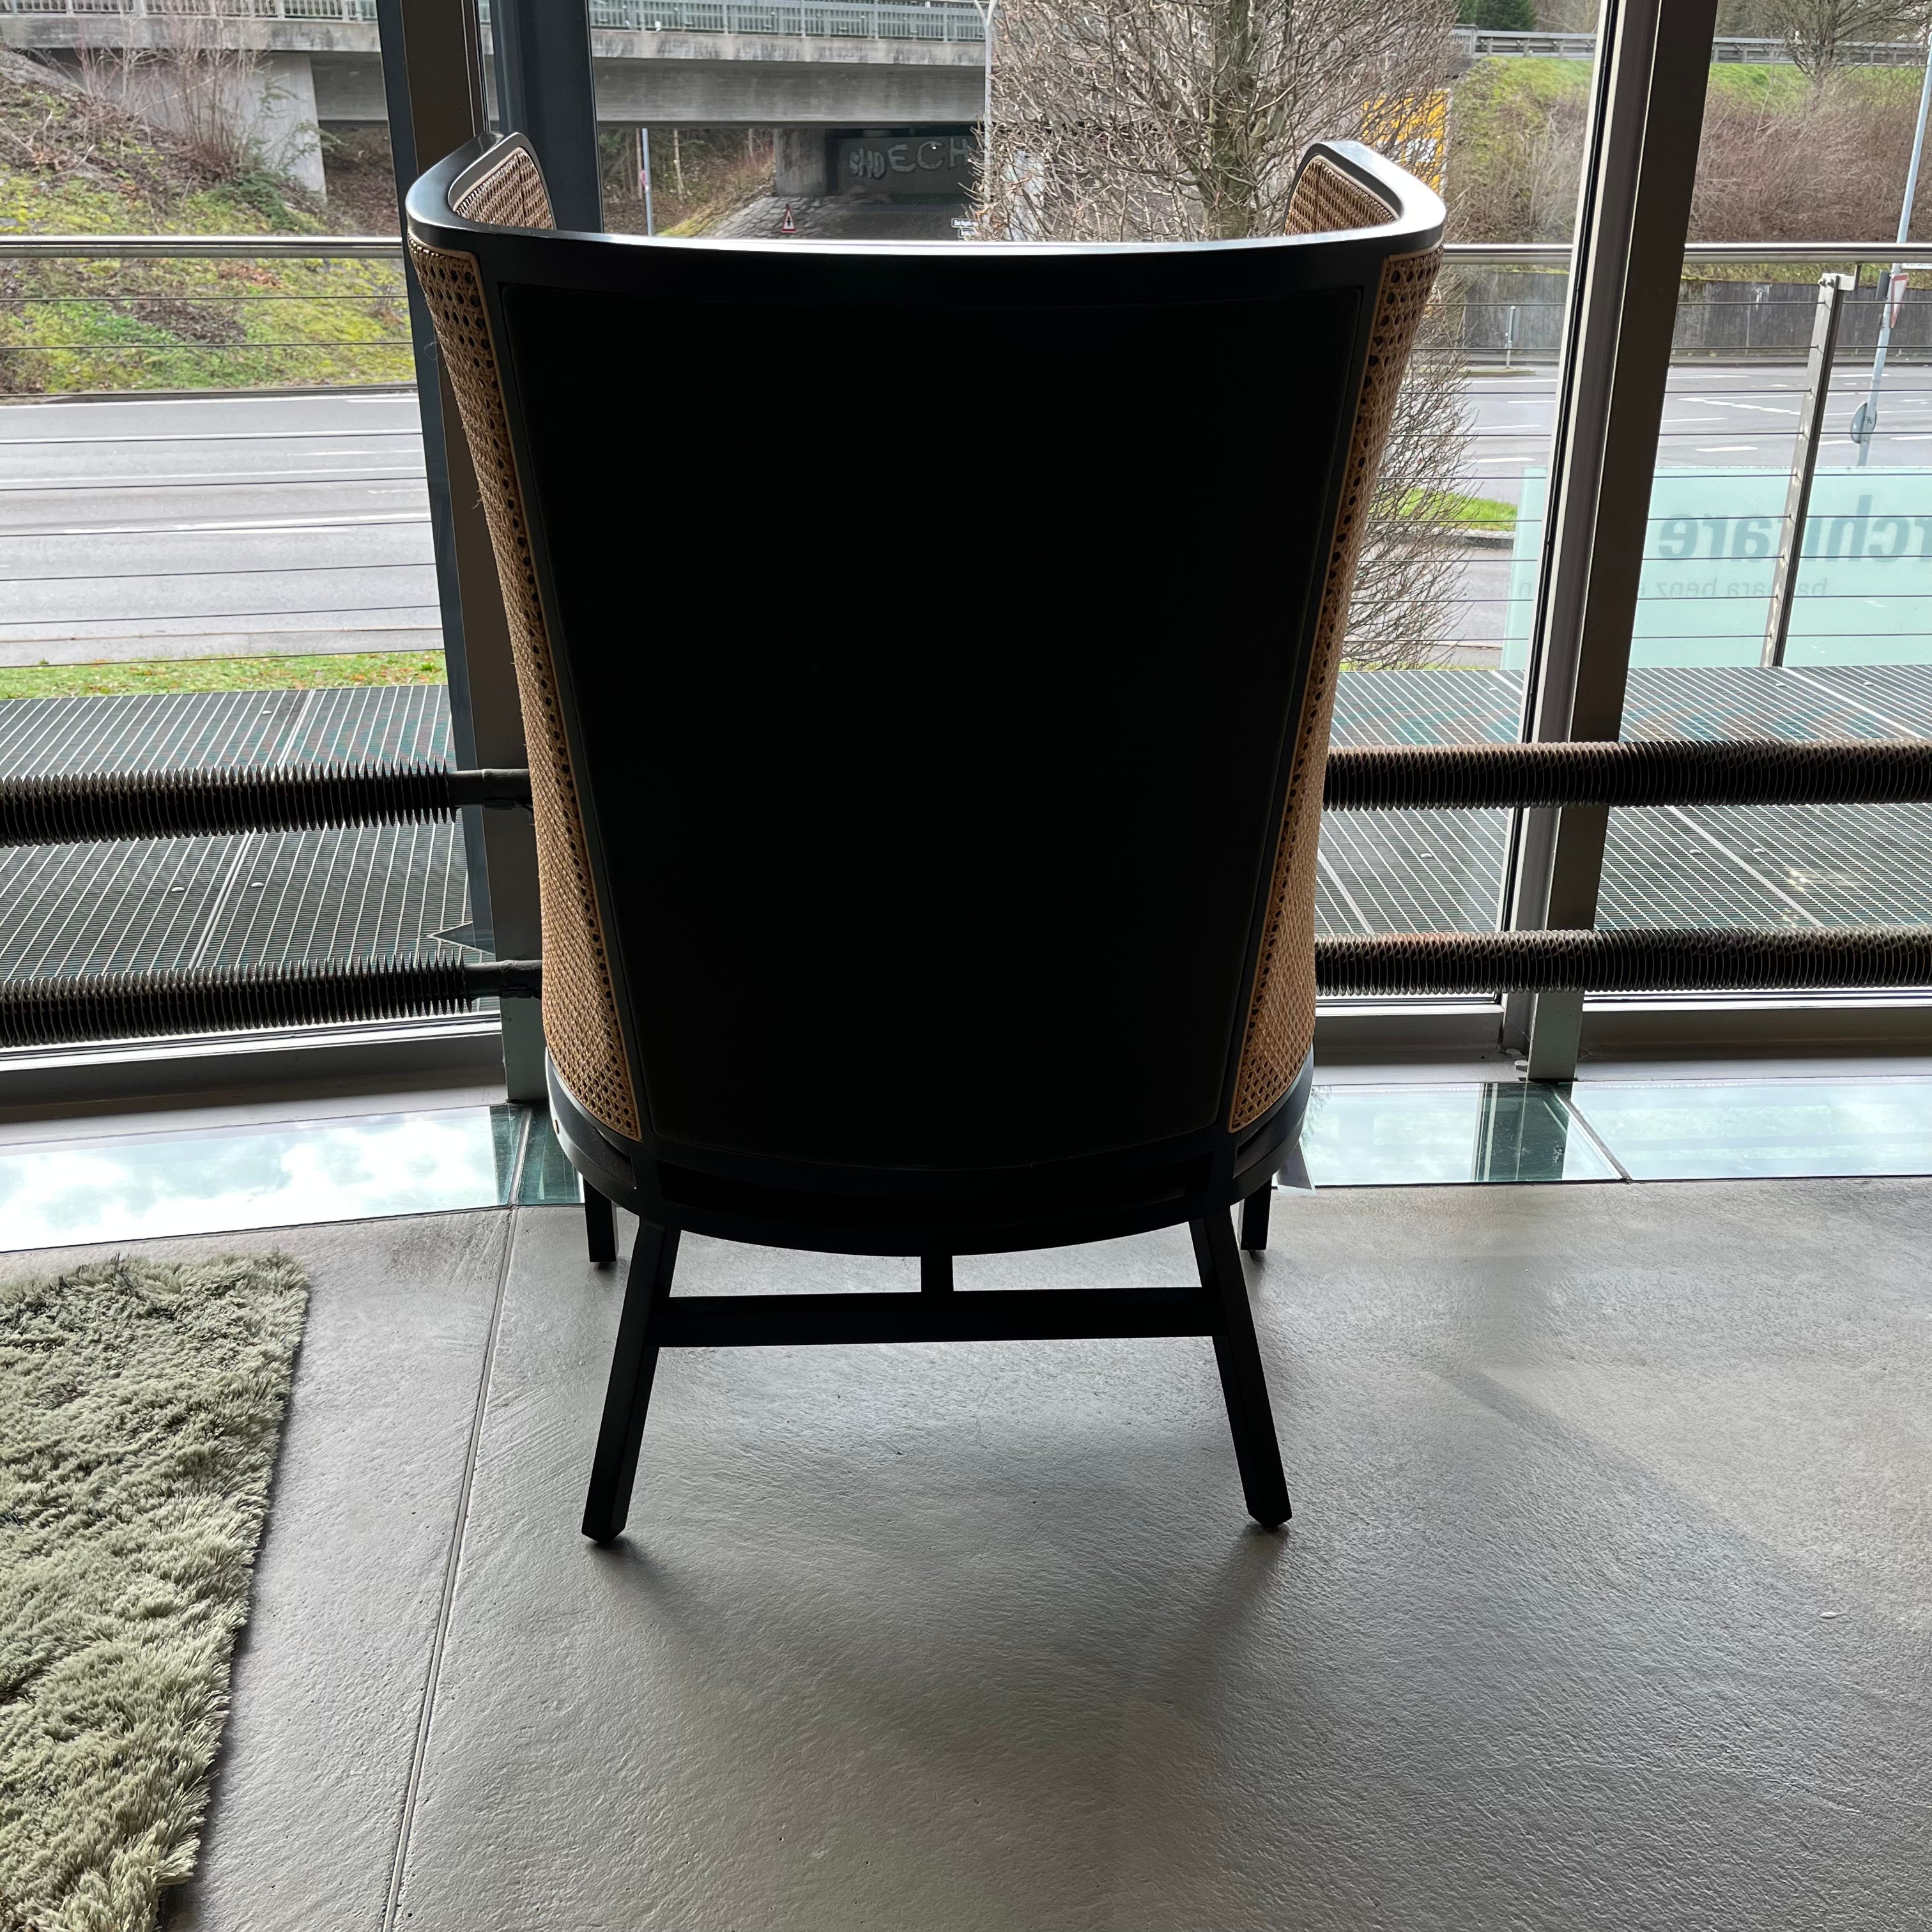 Gebrüder Thonet / Hideout Lounge Chair / Sessel